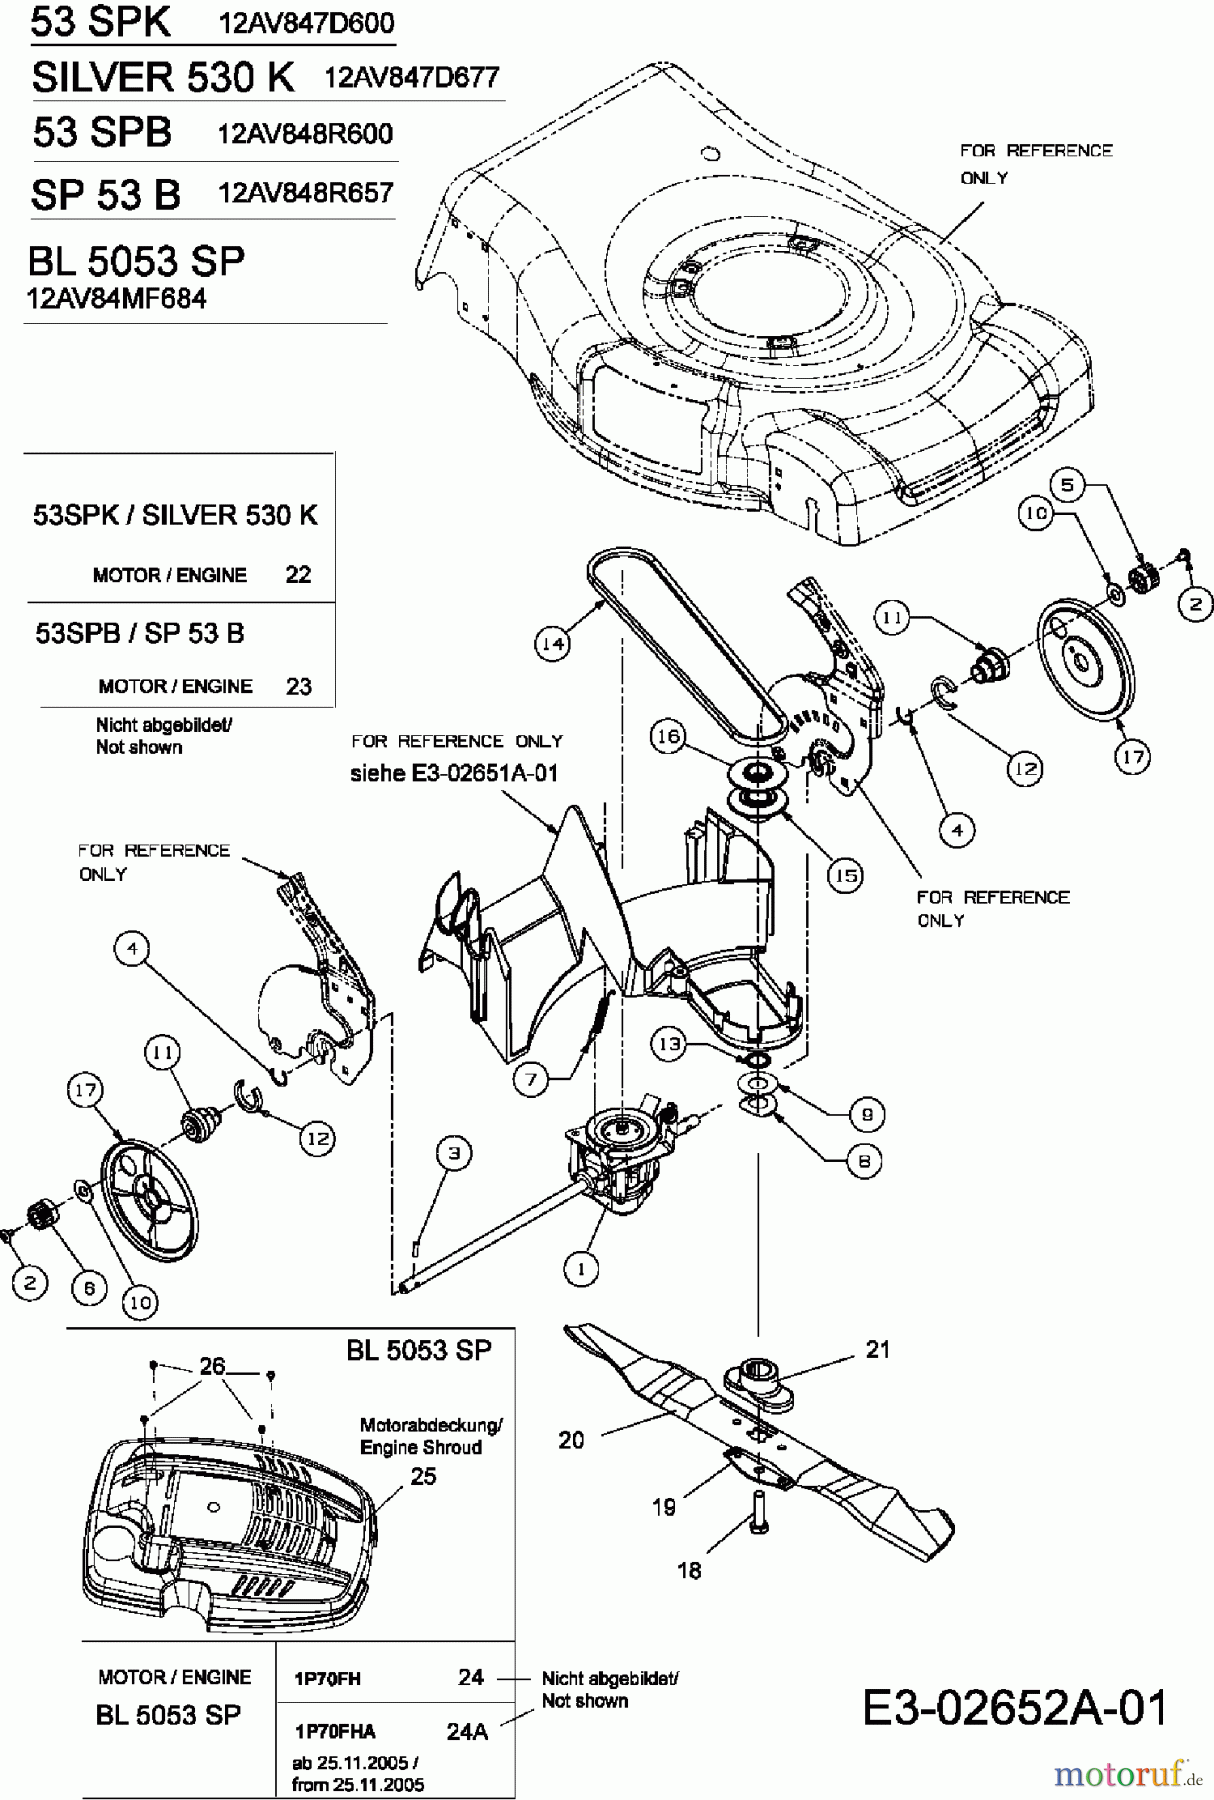  Mastercut Motormäher mit Antrieb SP 53 B 12AV848R657  (2006) Getriebe, Messer, Motor